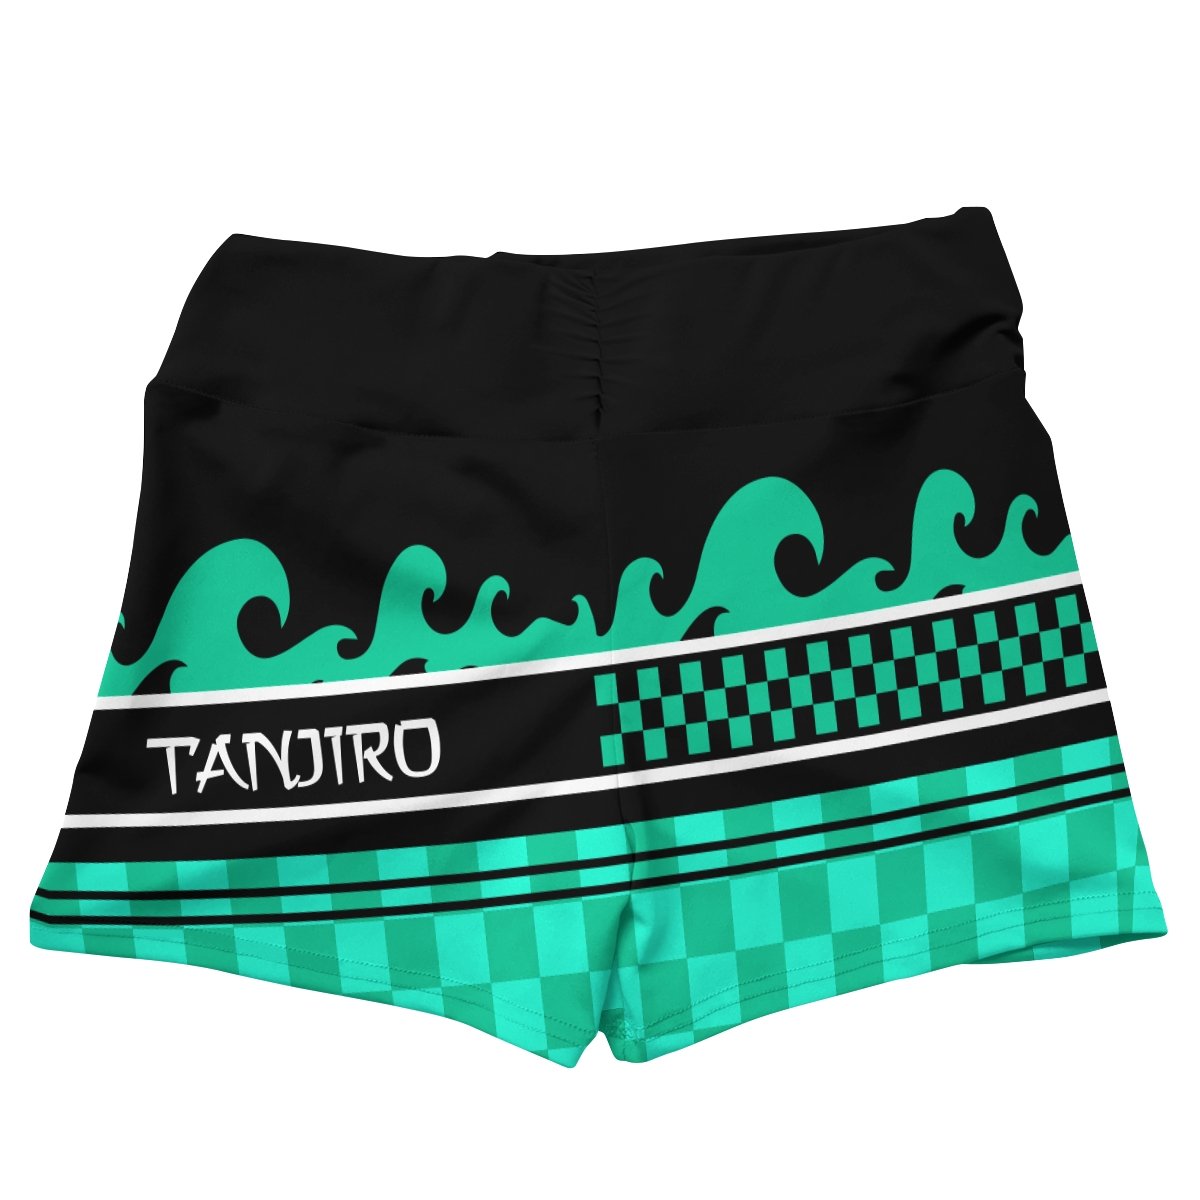 summer tanjiro active wear set 911977 - Anime Swimsuits